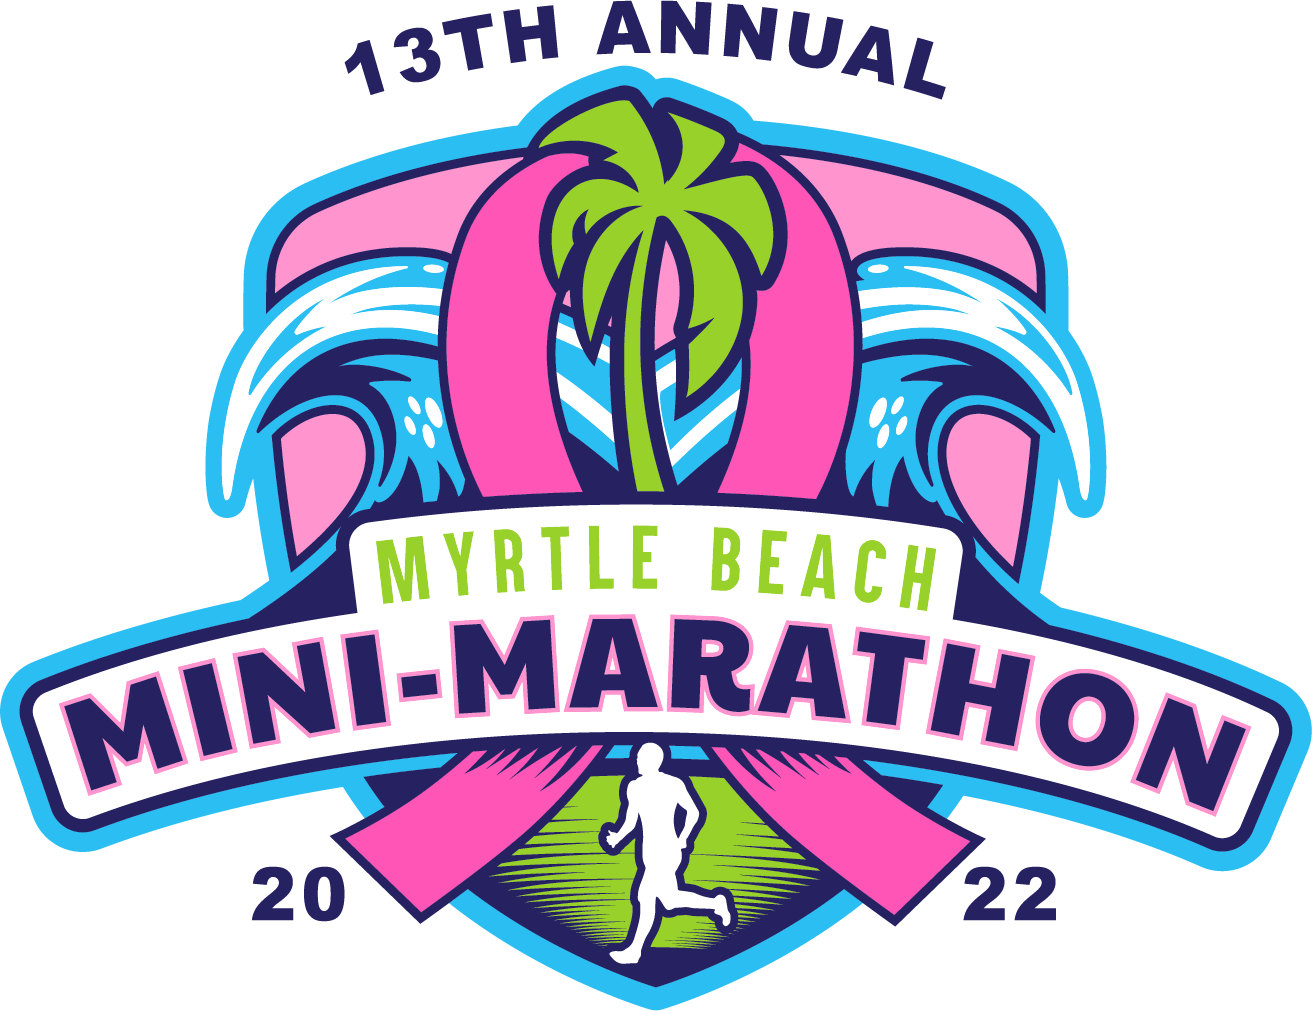 Myrtle Beach Mini Marathon logo on RaceRaves